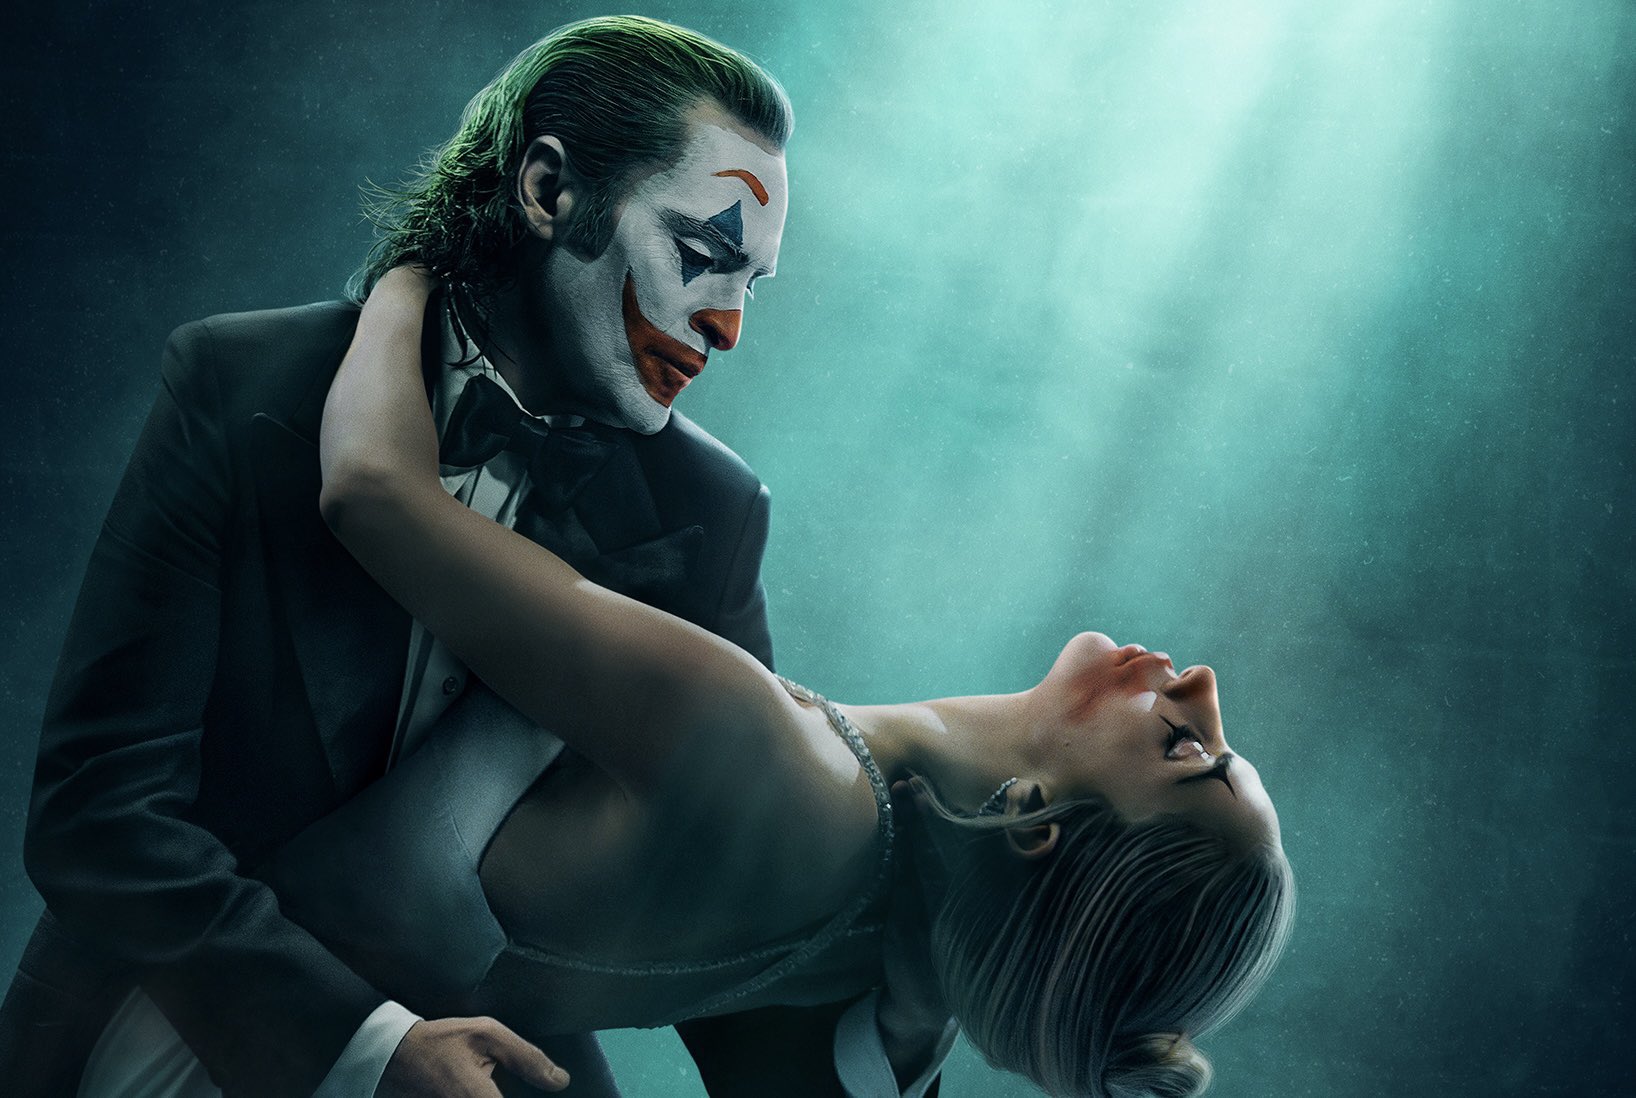 Joker Folie à Deux trailer: Το κλιπ που ξεπέρασε μέσα σε 6 ώρες τις 3,5 εκατ. προβολές